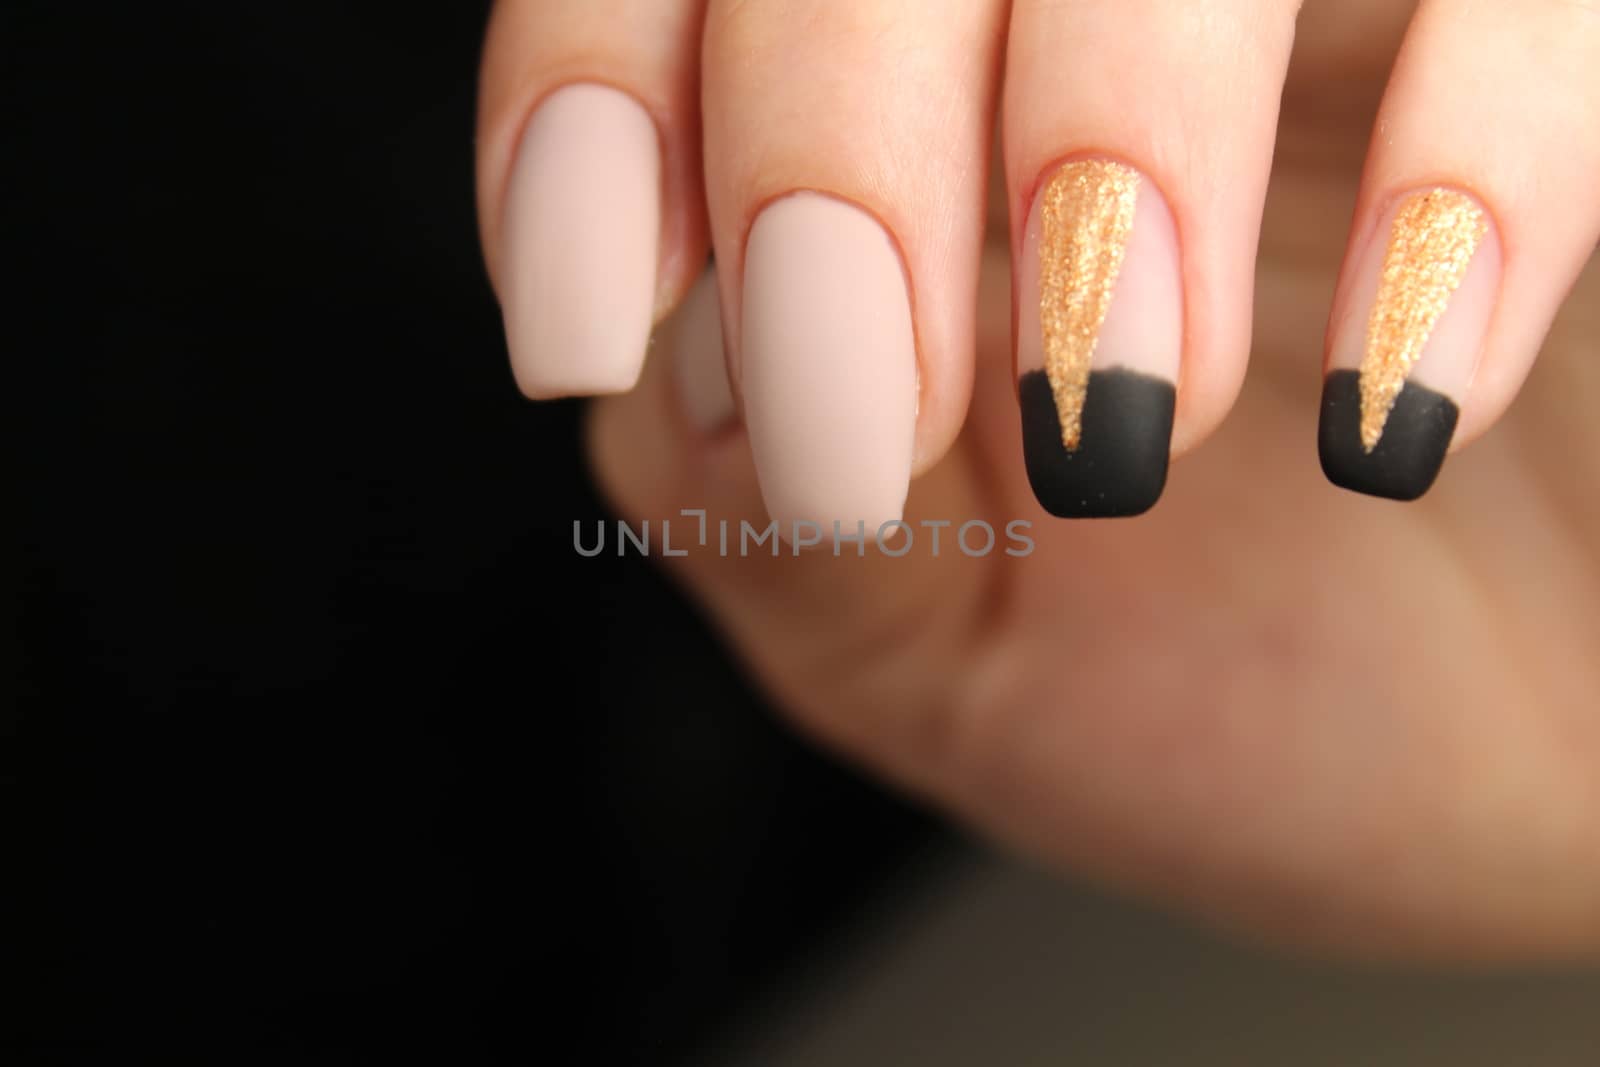 Manicure design nails by SmirMaxStock